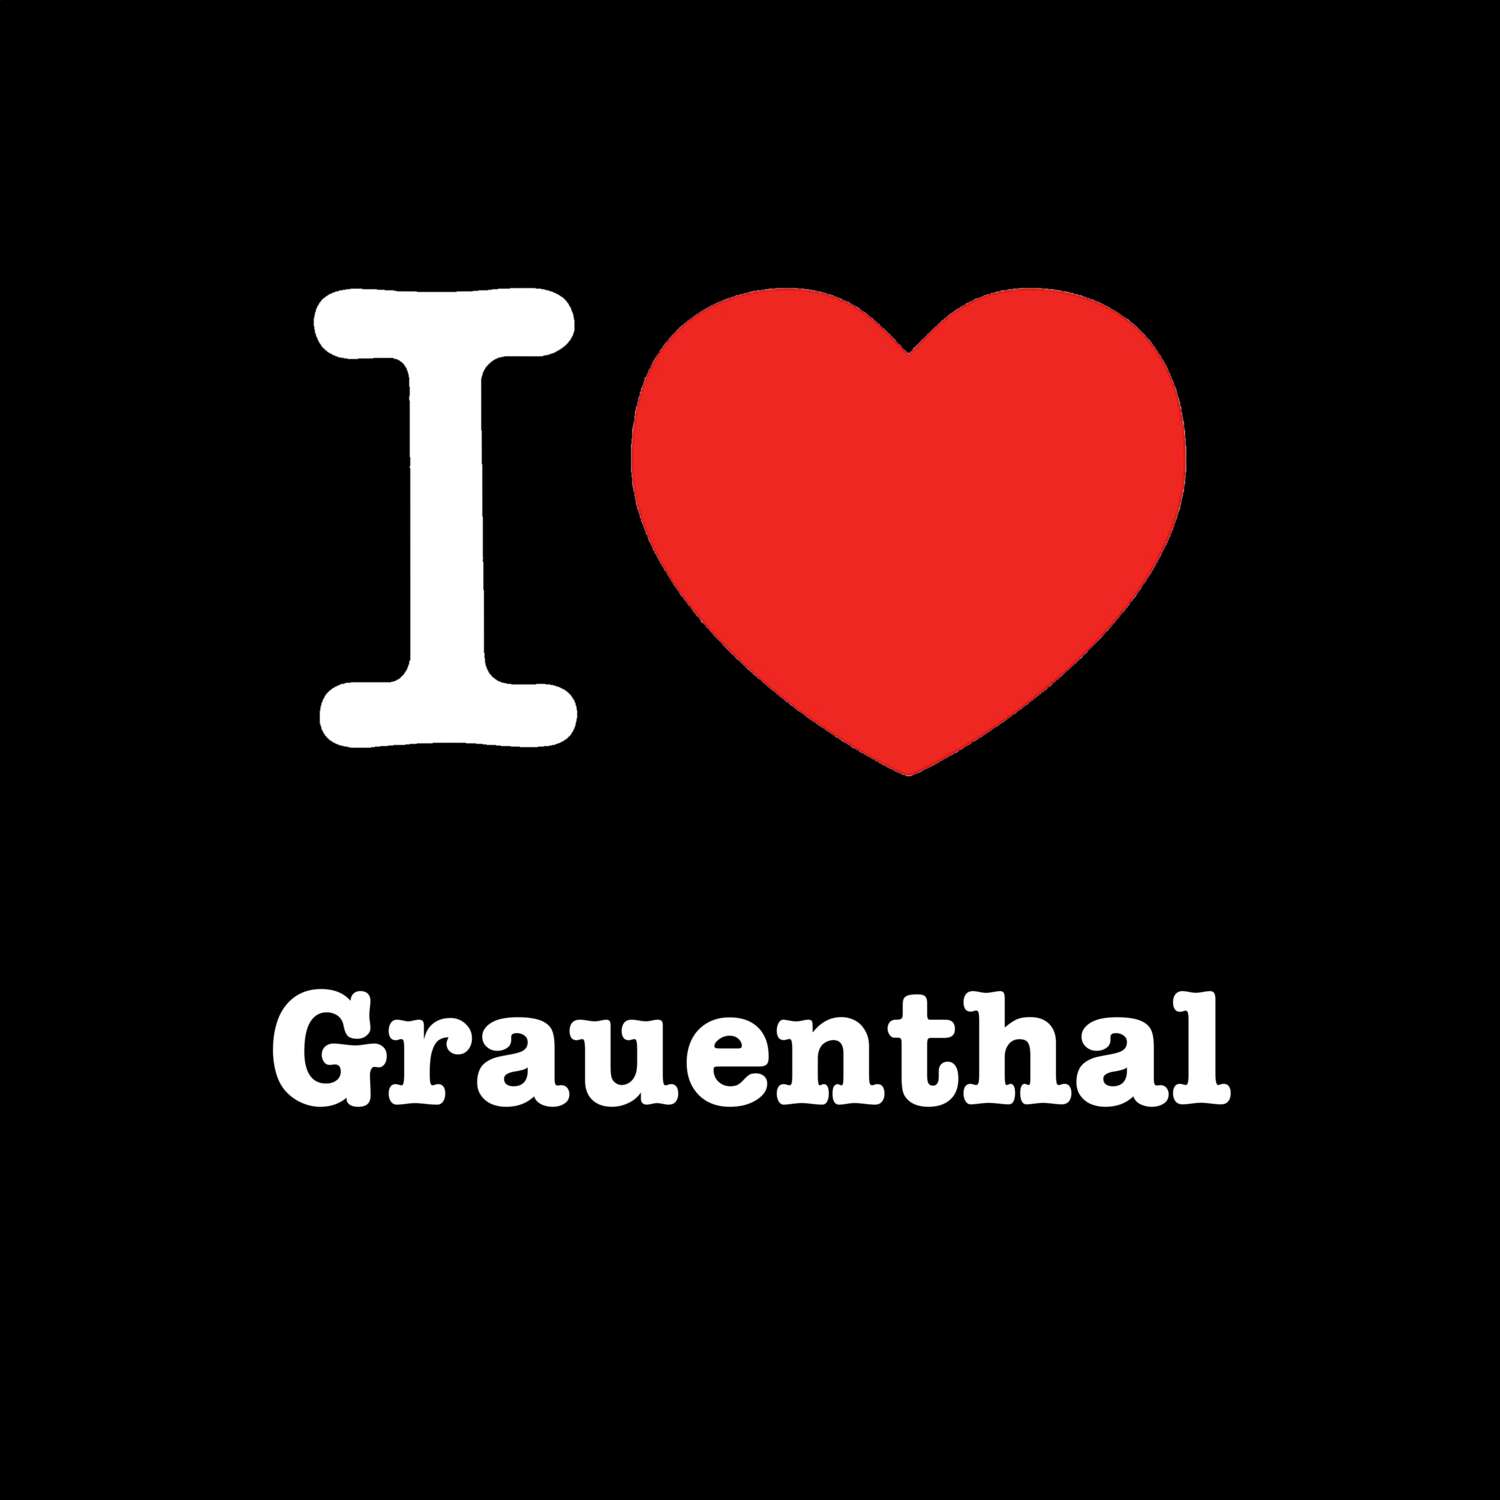 Grauenthal T-Shirt »I love«